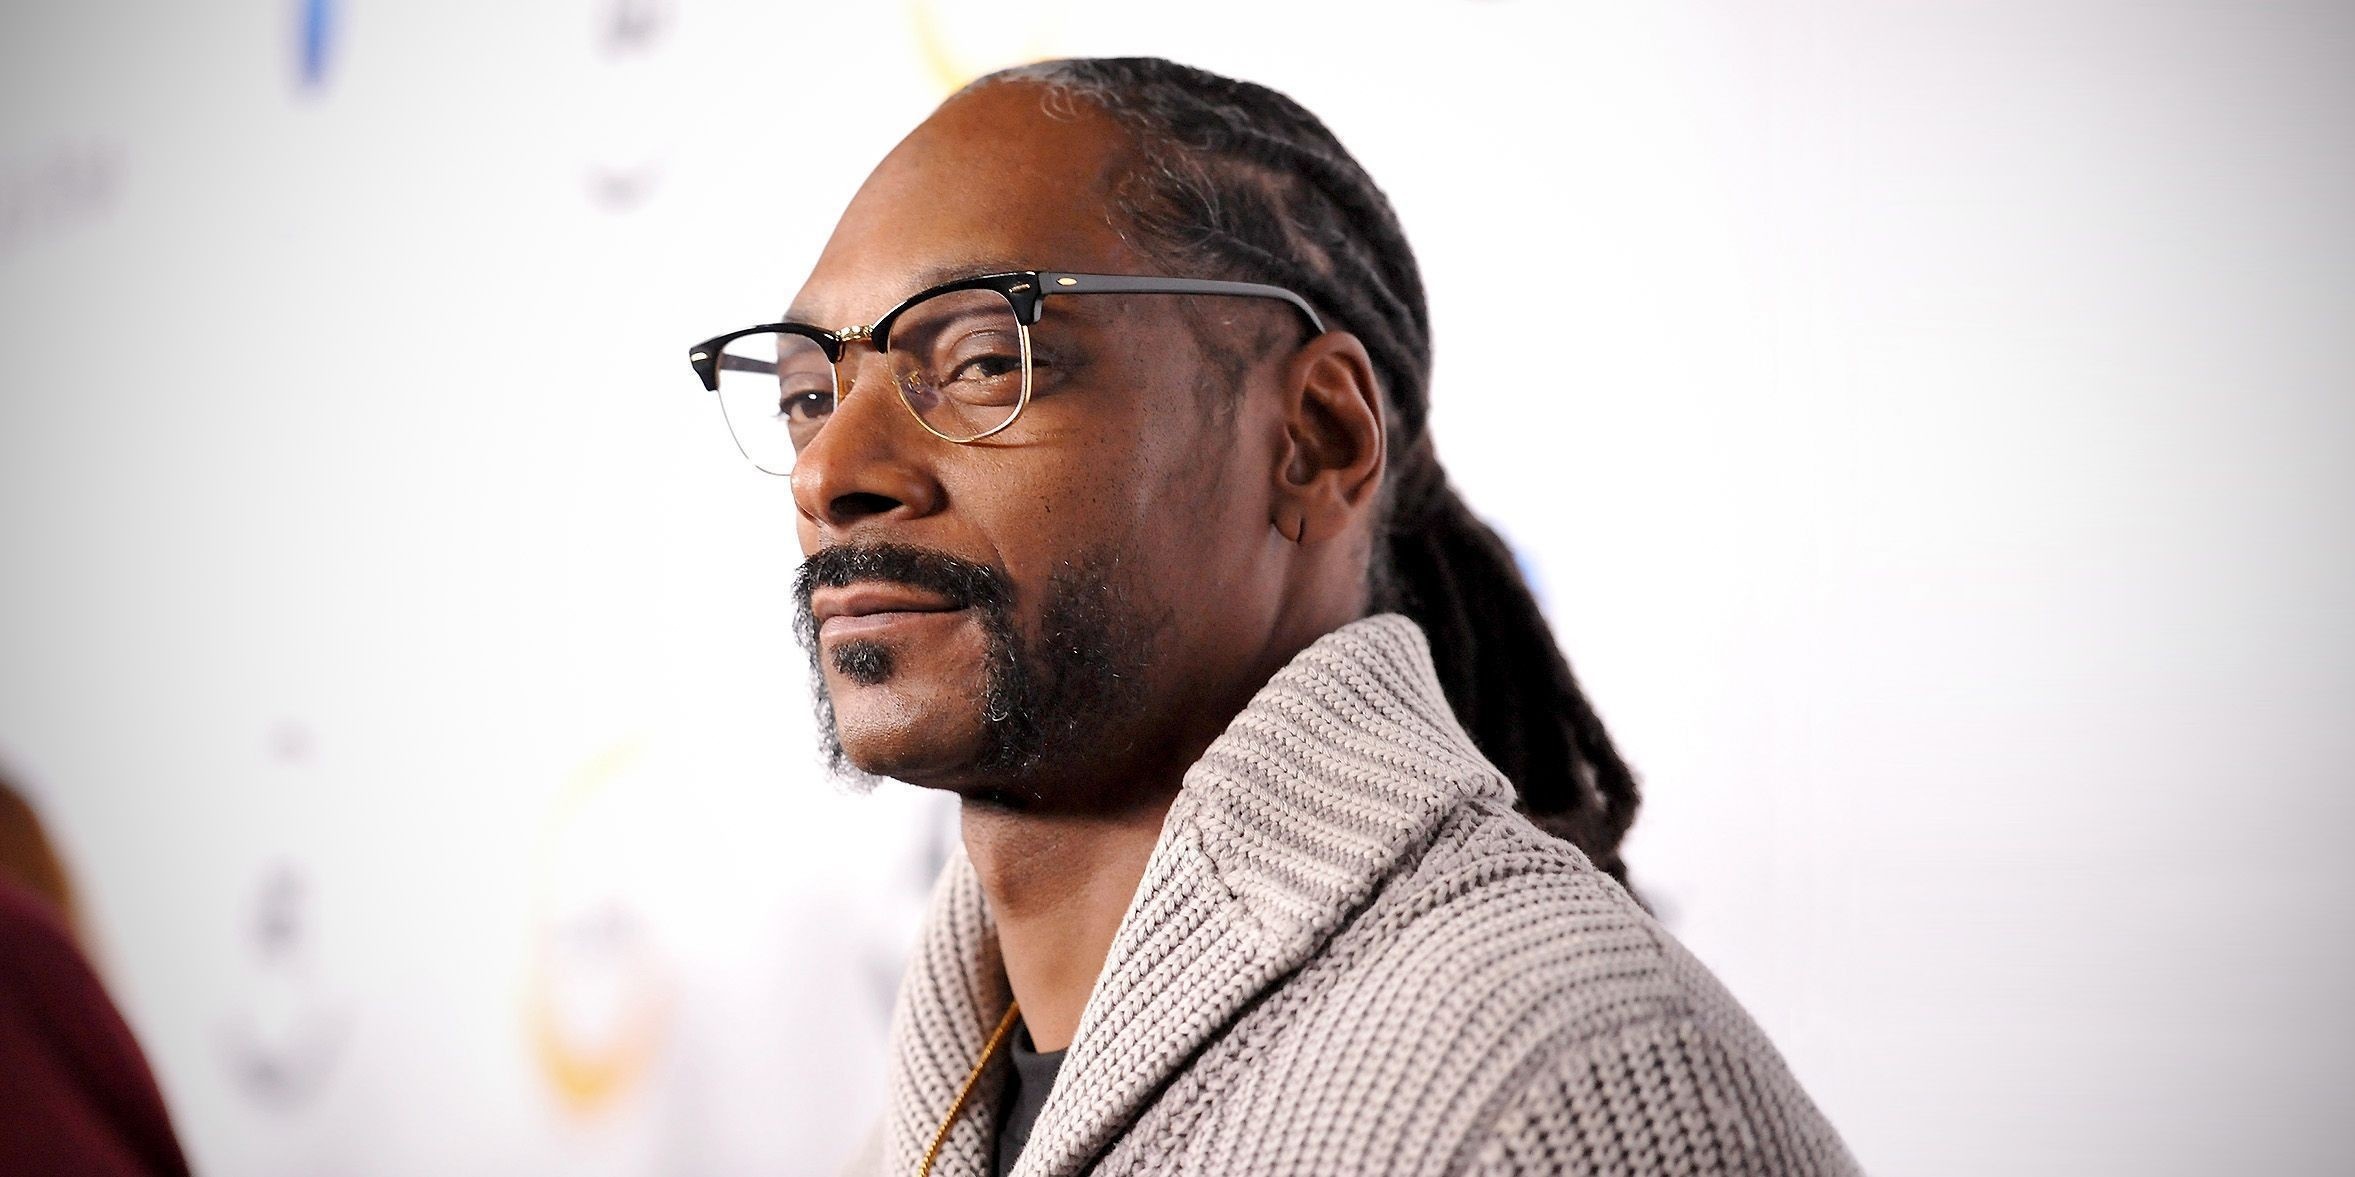 Snoop Dogg, Striking wallpapers, HD images, Unique backgrounds, 2360x1180 Dual Screen Desktop